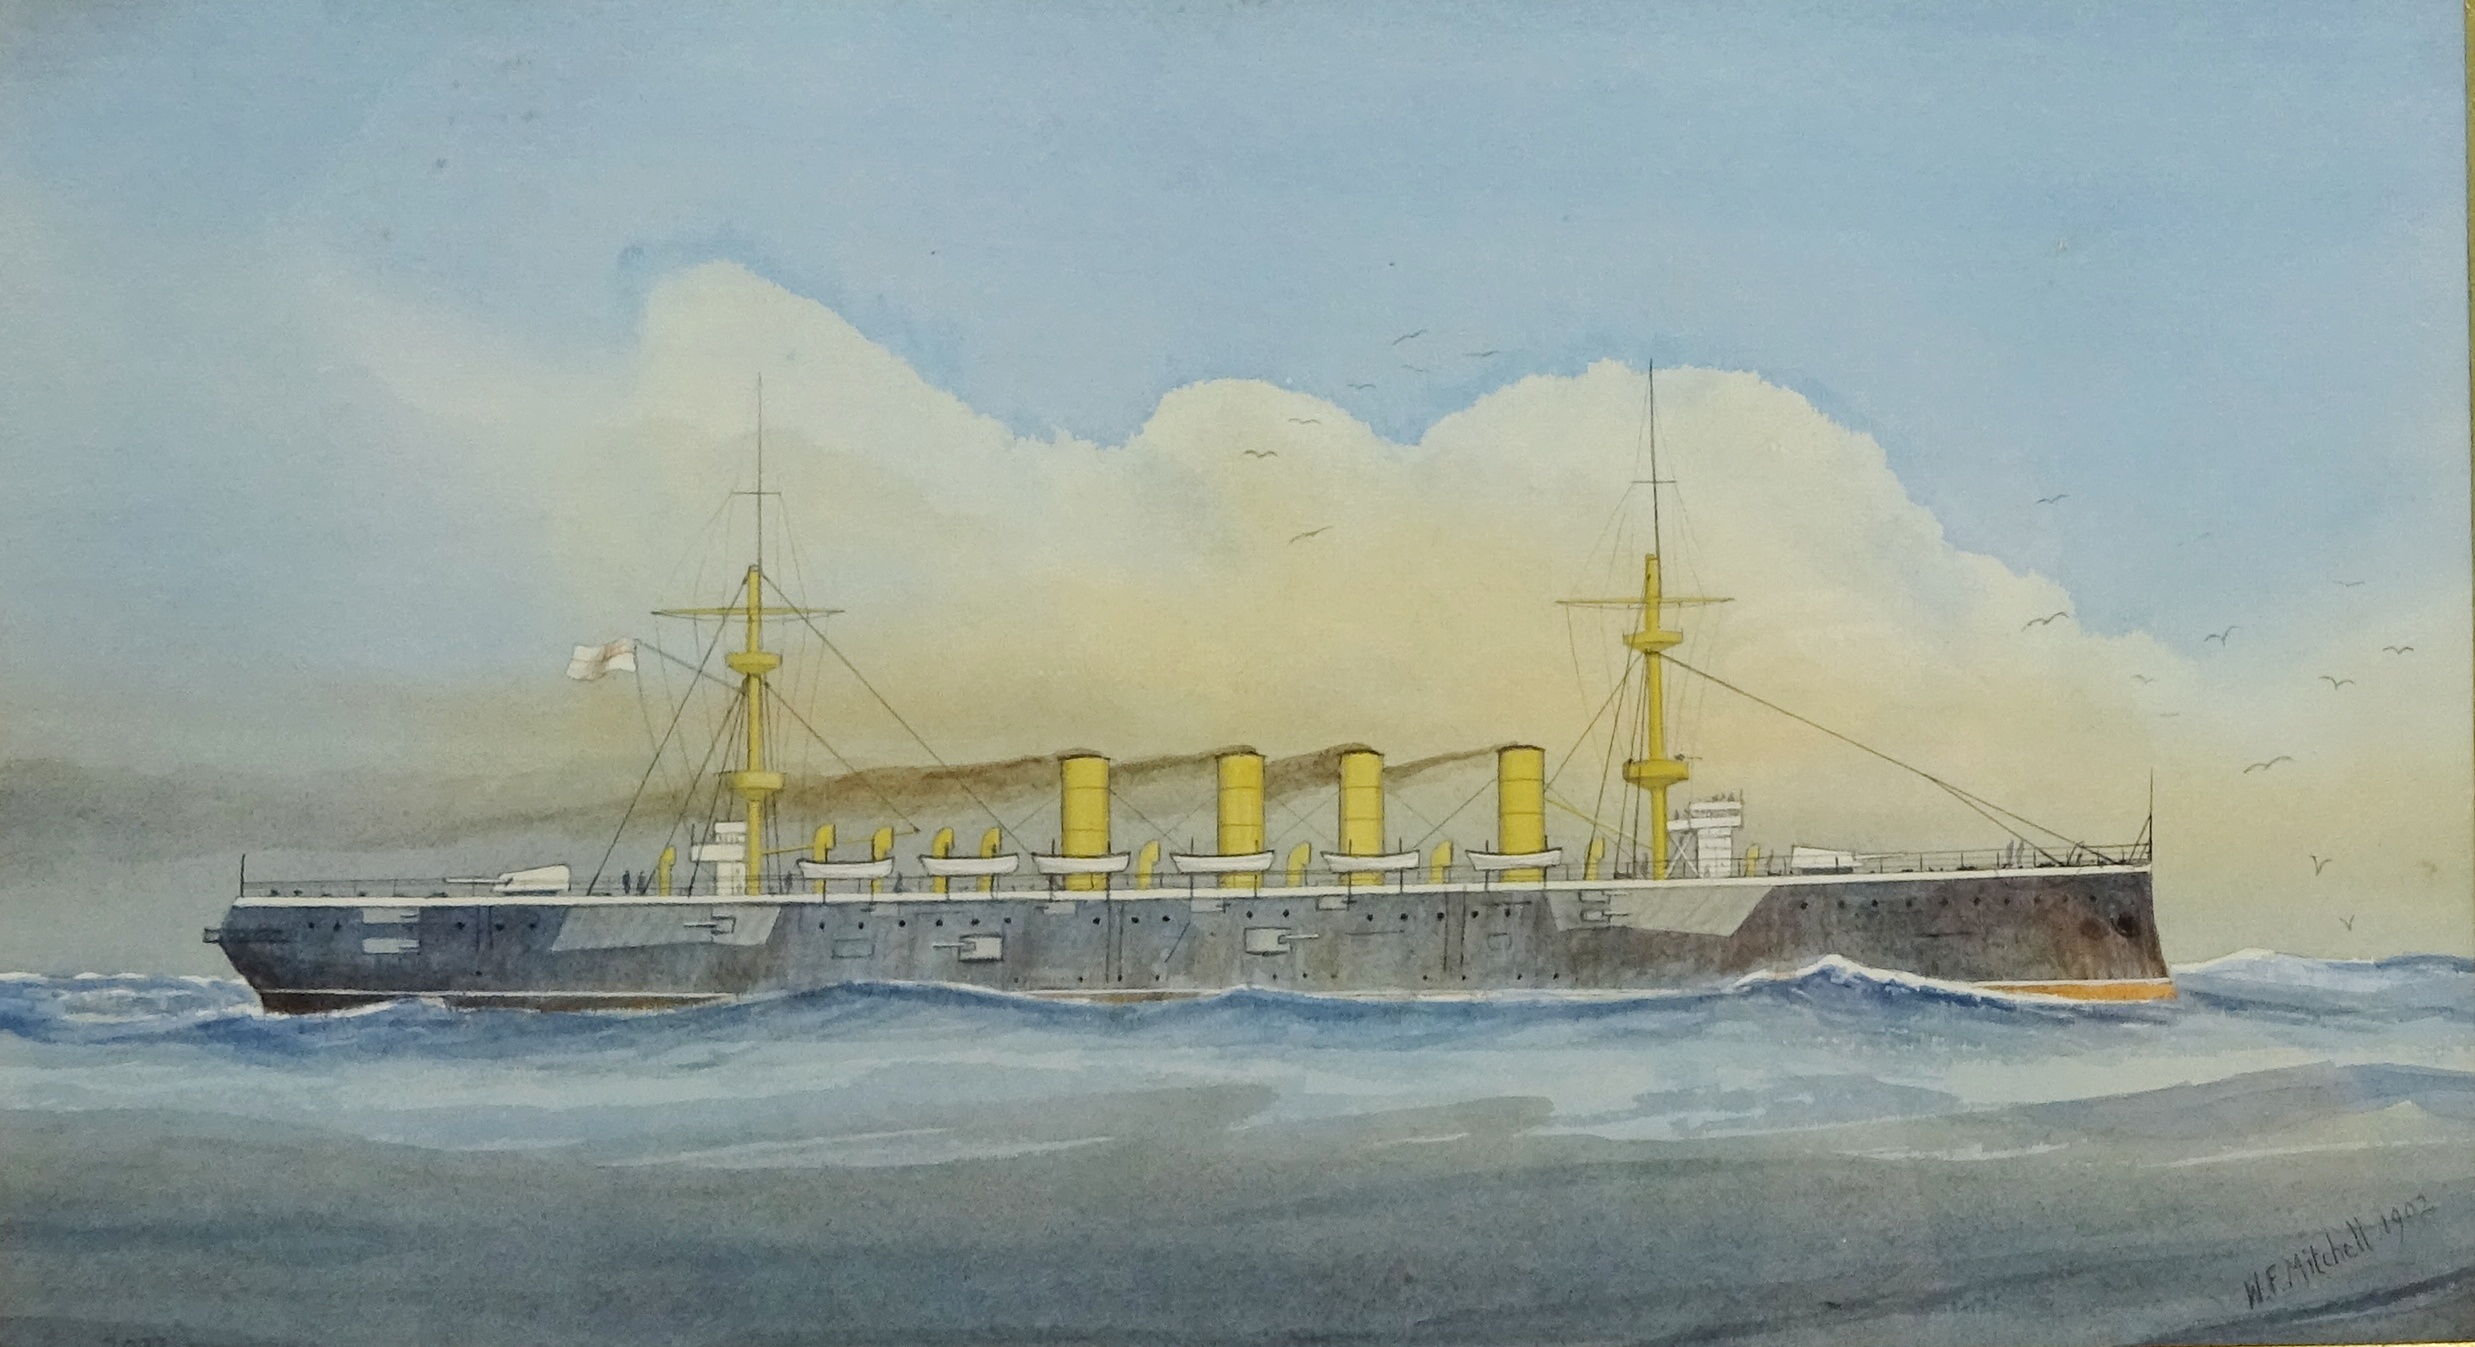 British Steam Battleship Portrait, watercolour bears signature W F Mitchell and date 1902,